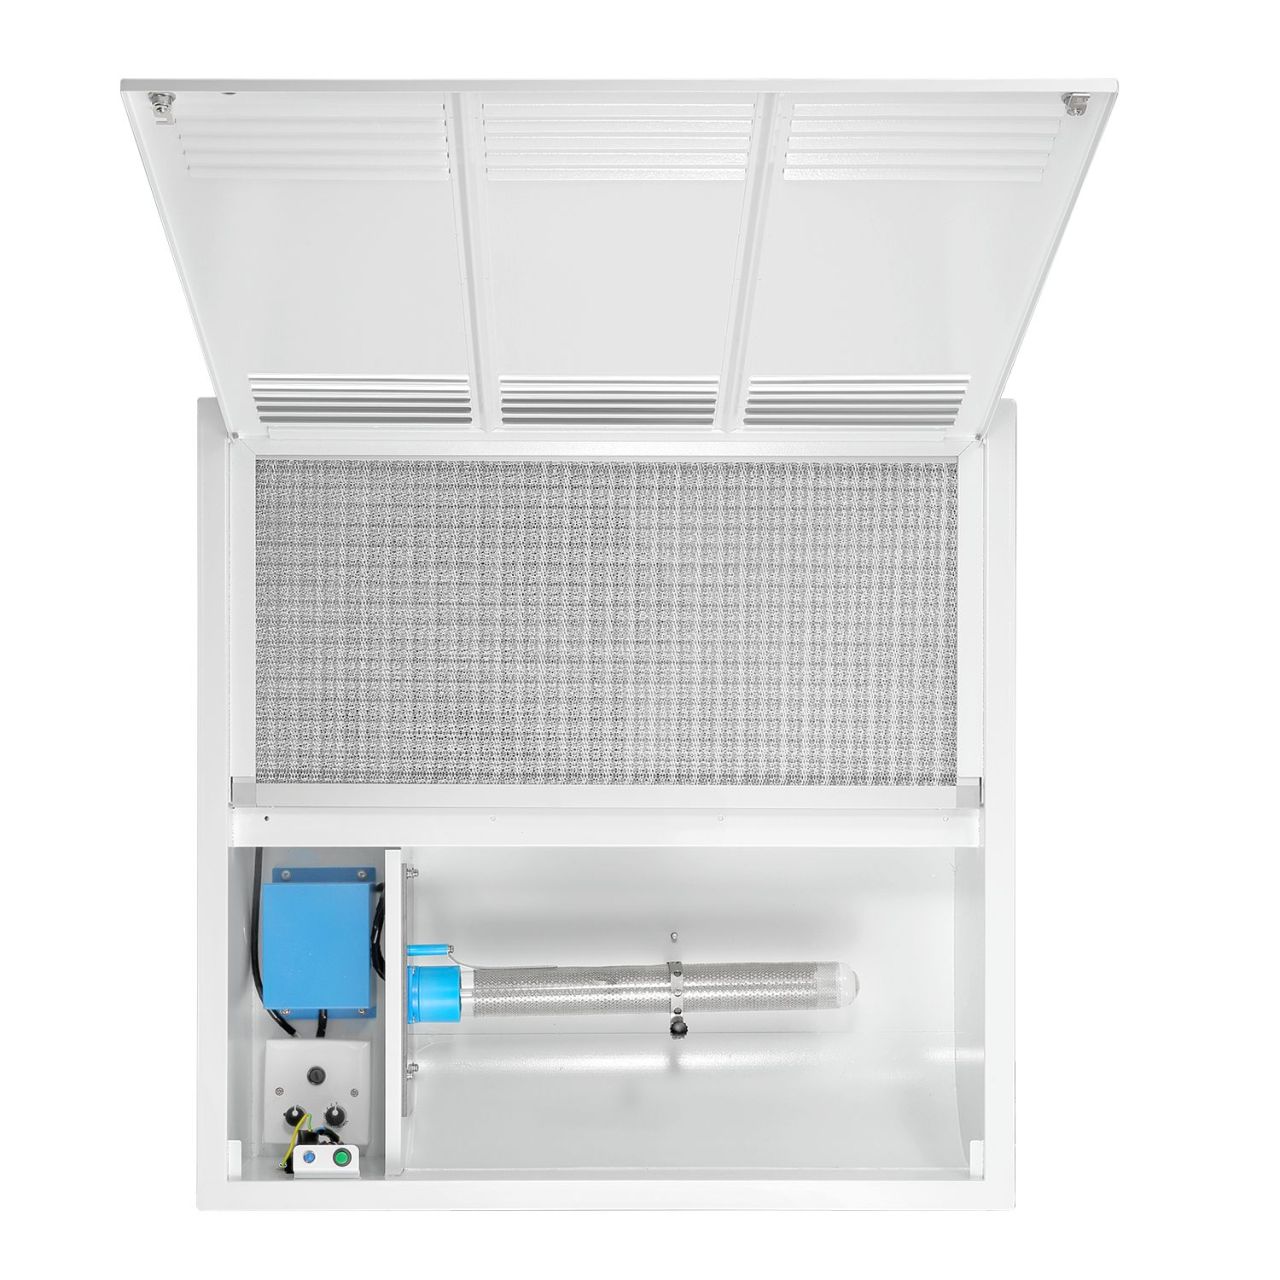 EddaAir PS-501T1  Ceiling mounting air purifier